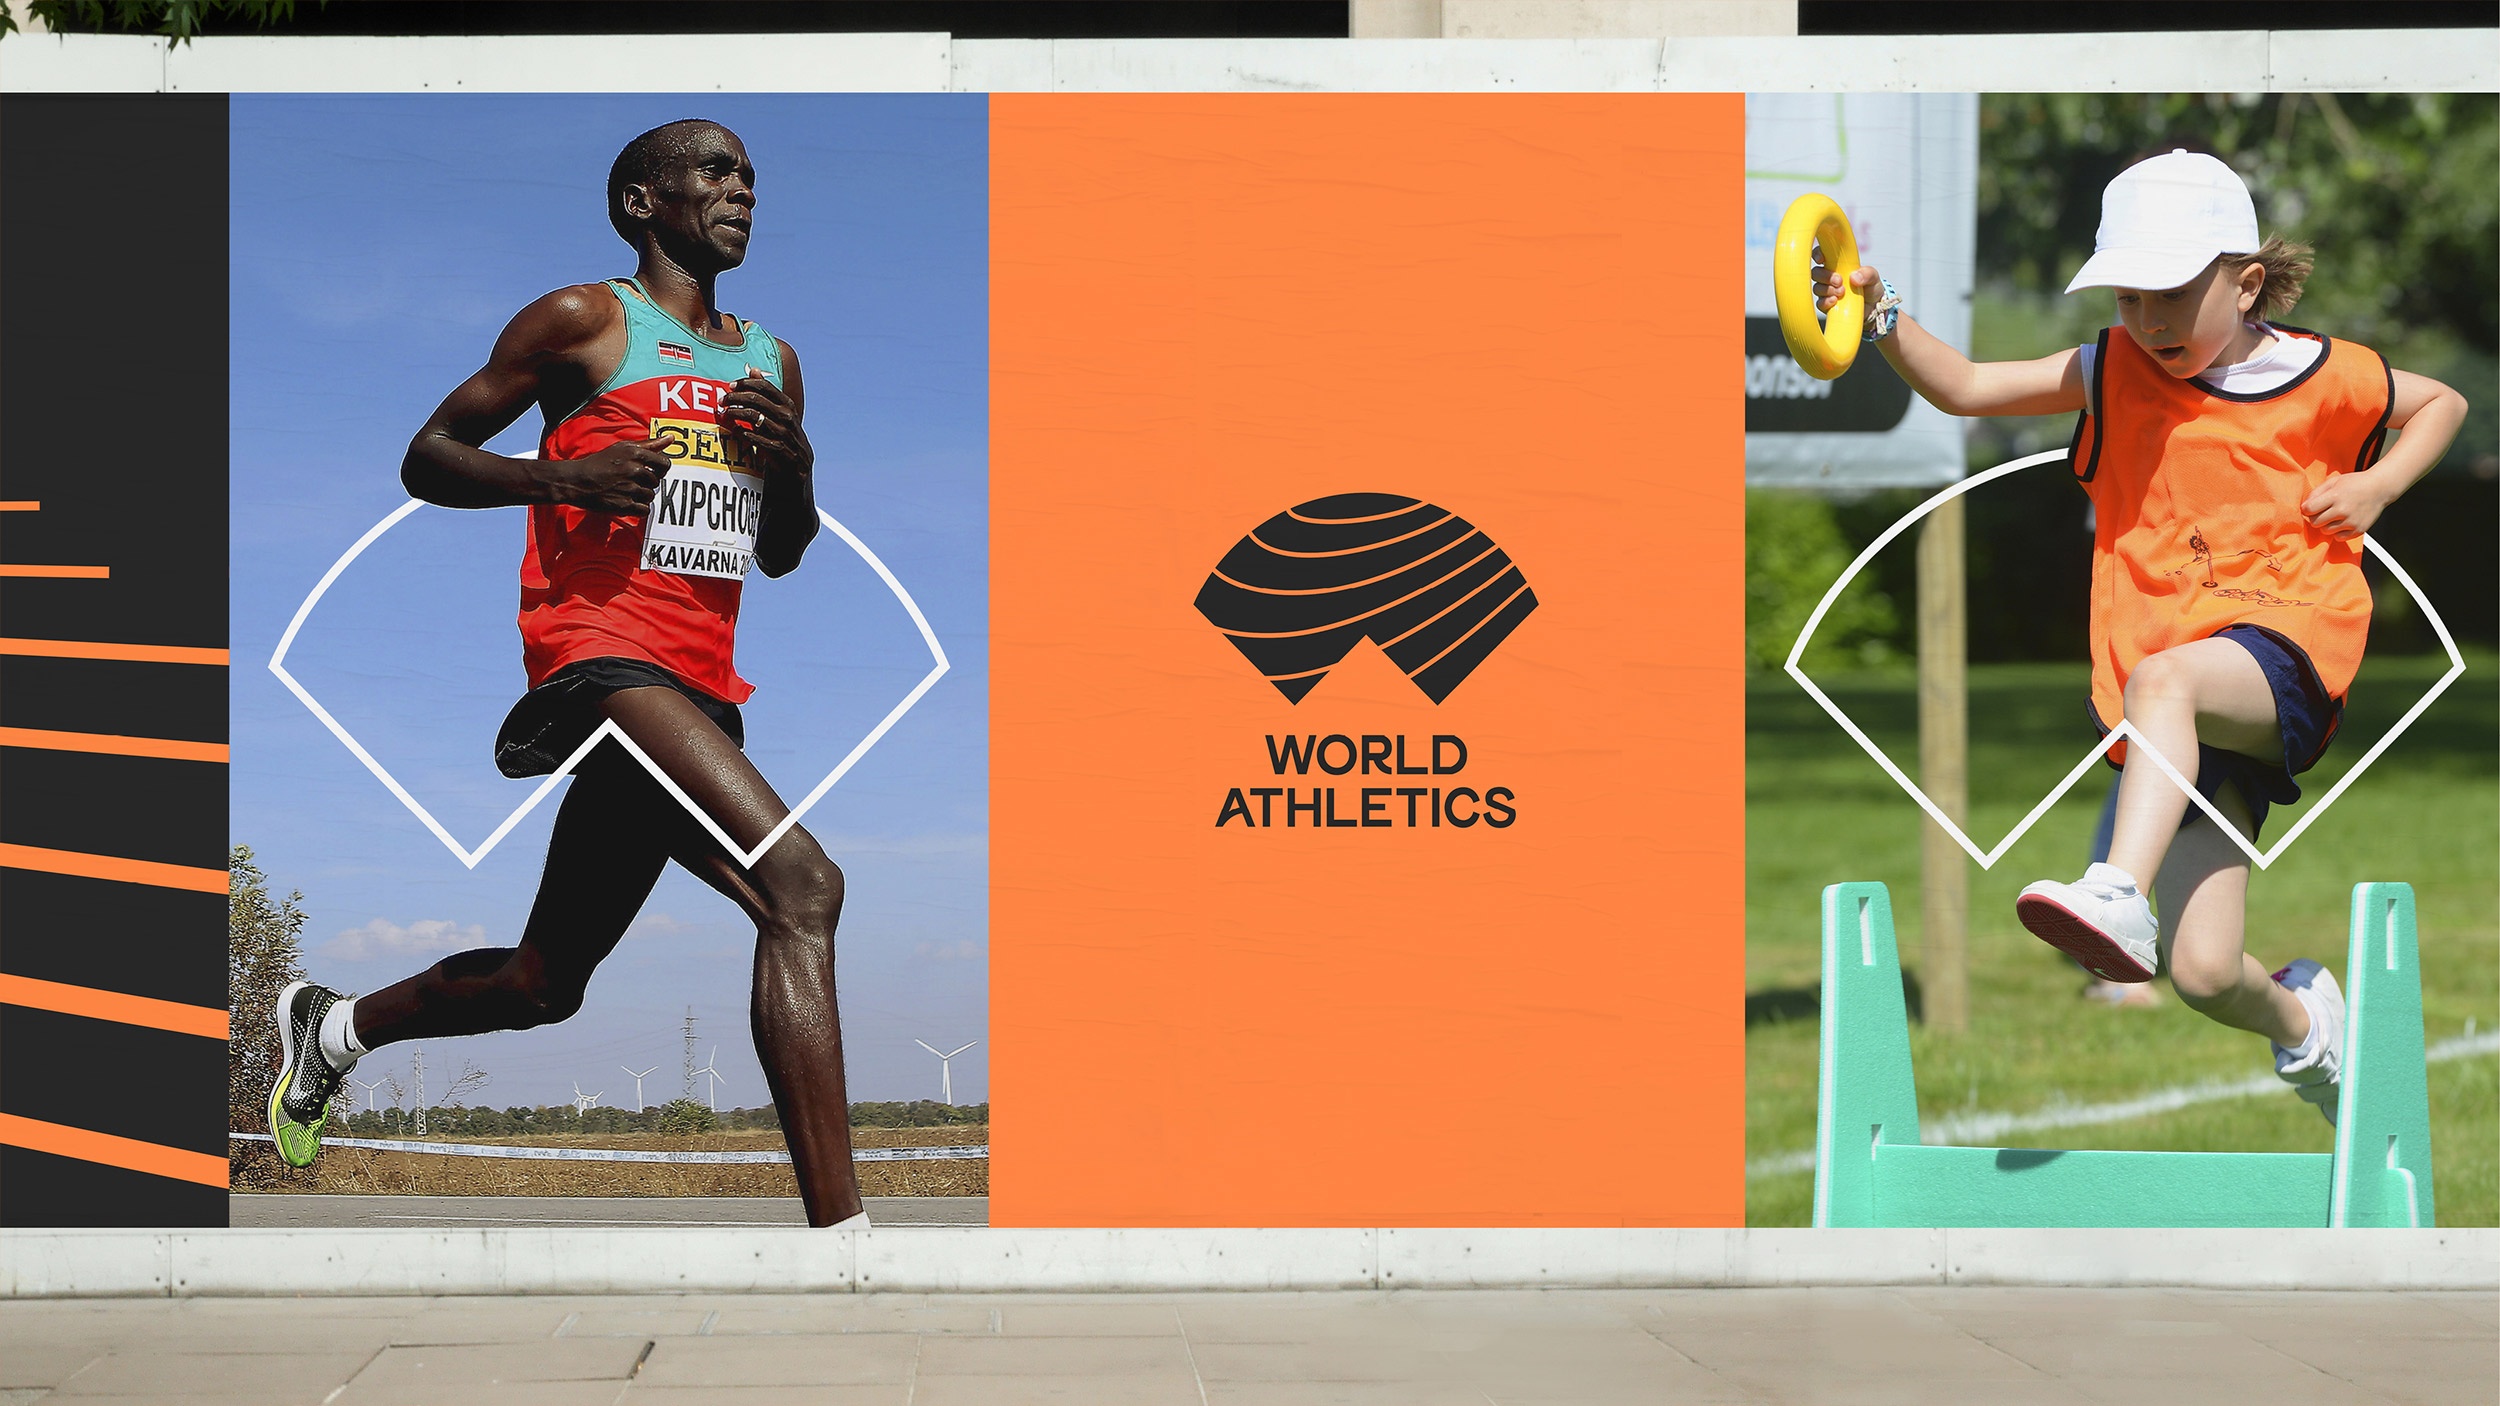 World Athletics Branding, Quelle: IAAF